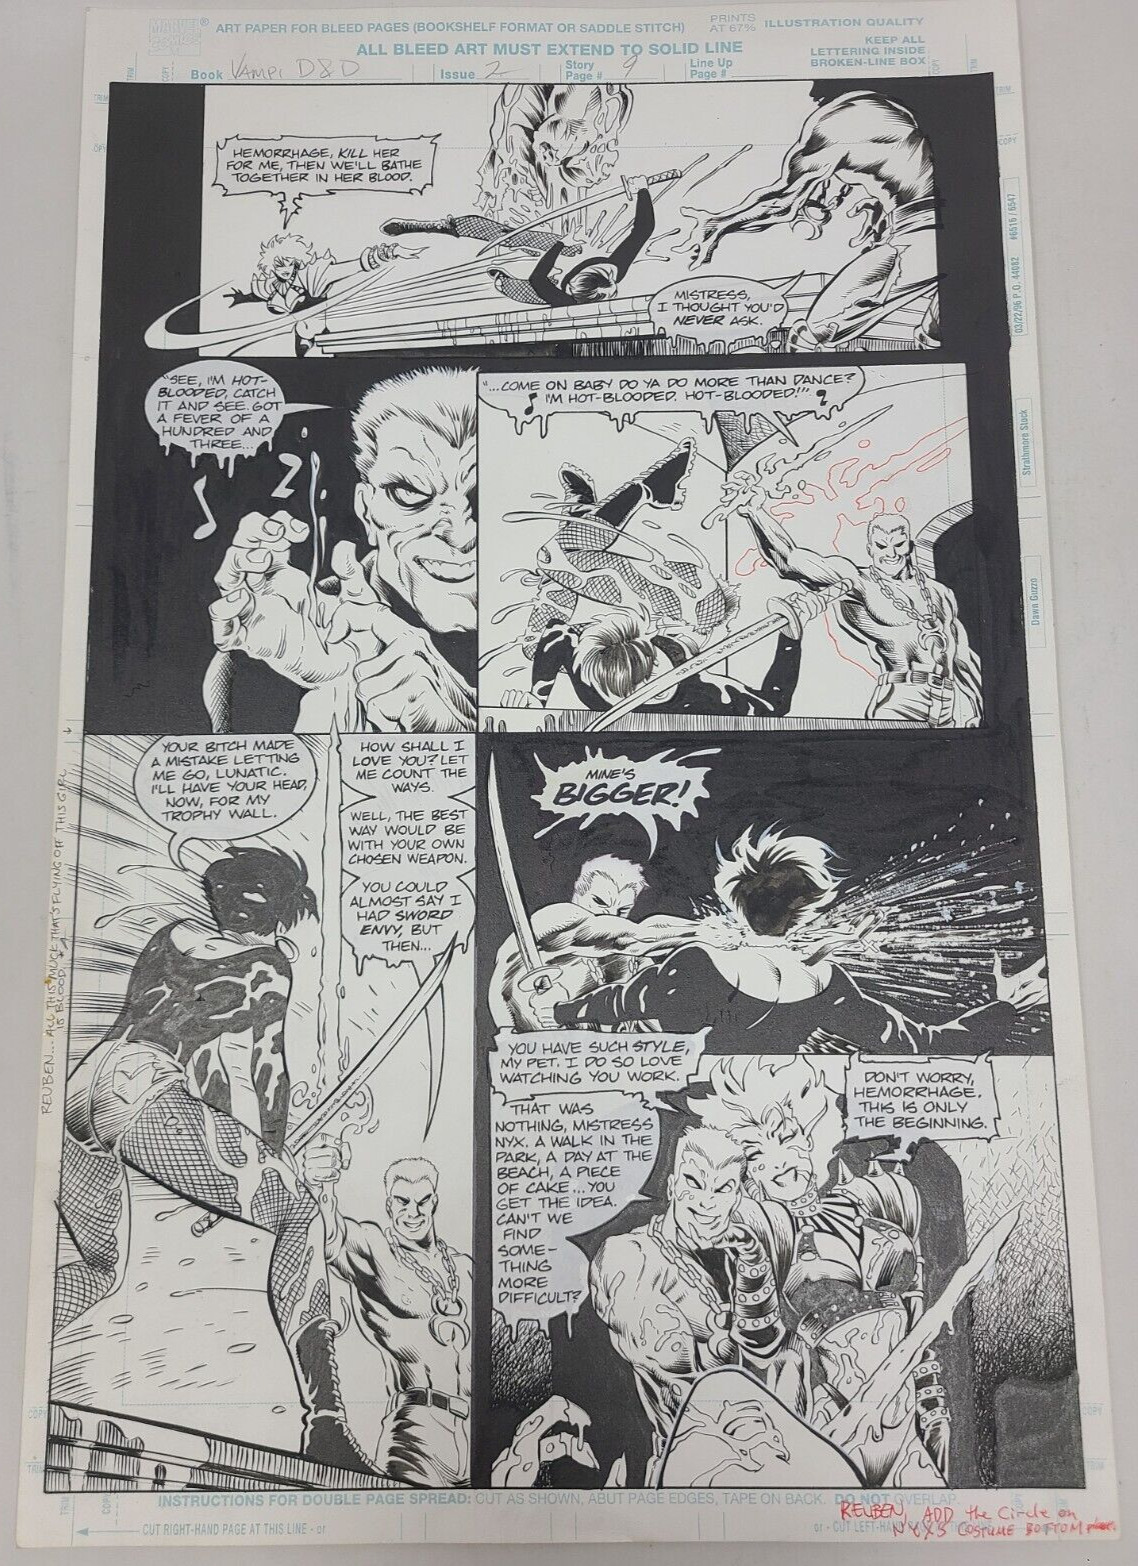 1996 Harris Vampirella Death & Destruction #2 Page 9 Conner Original Art 11x17